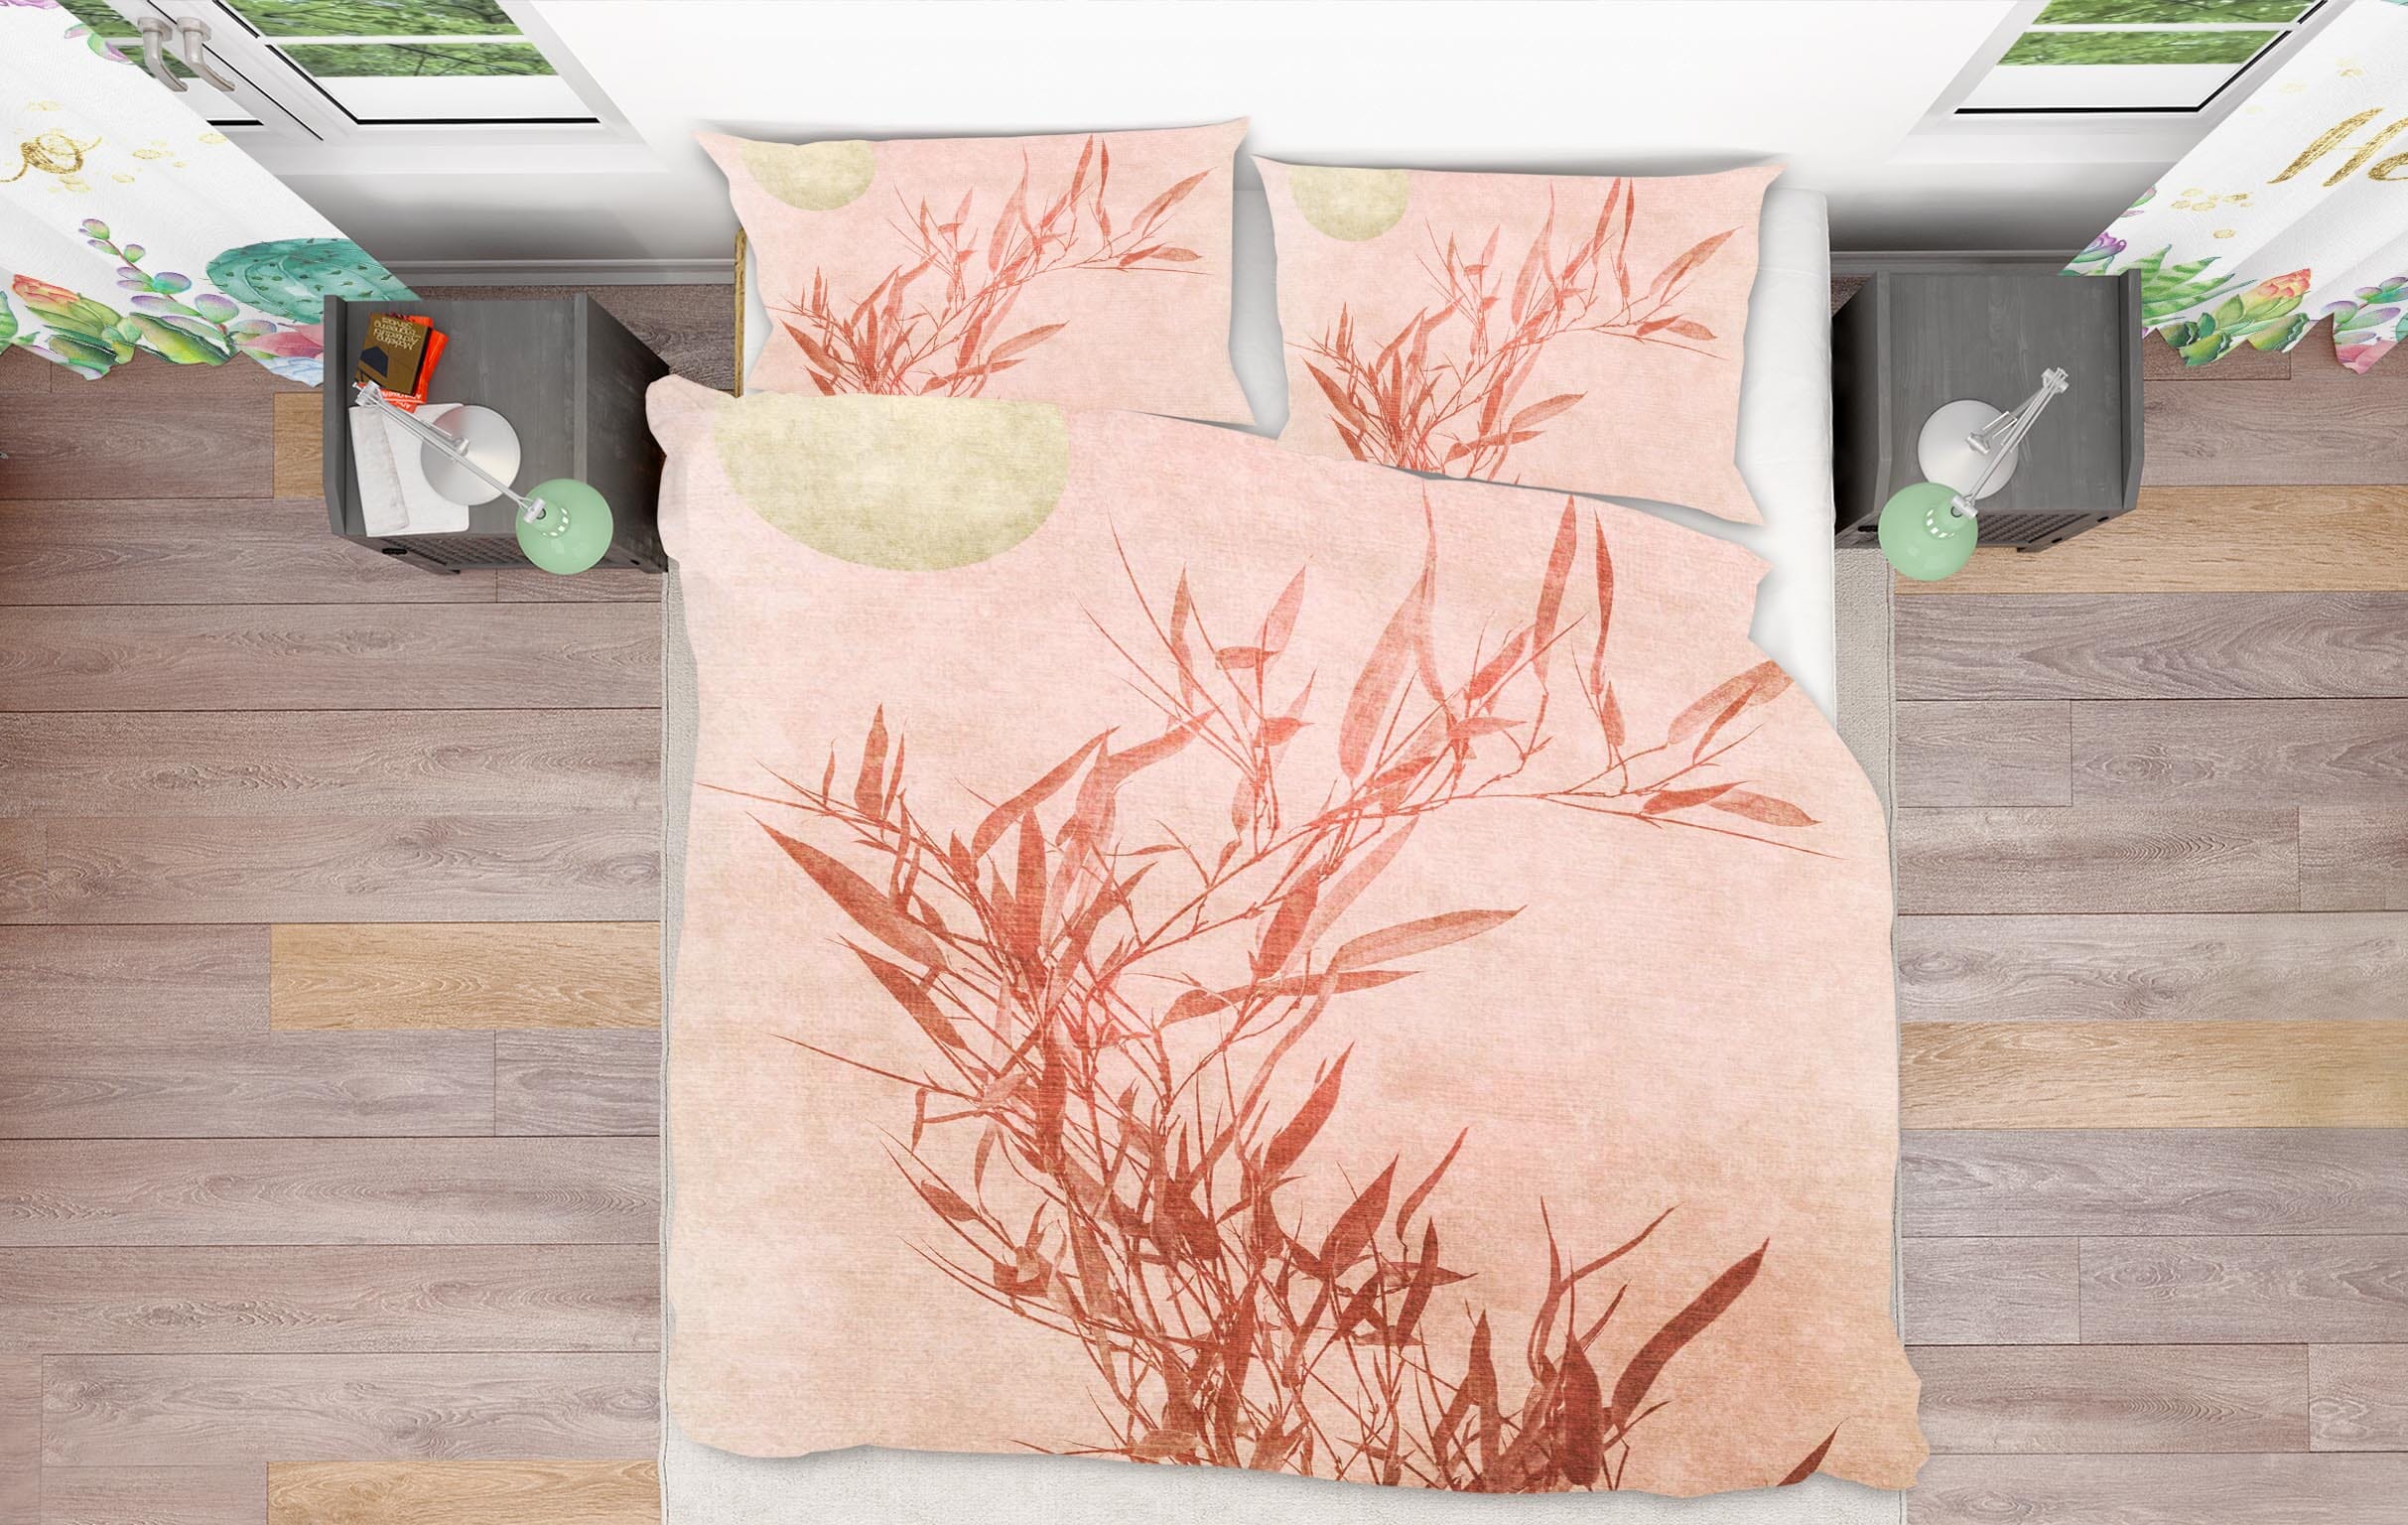 3D Sentimental Touch 2110 Boris Draschoff Bedding Bed Pillowcases Quilt Quiet Covers AJ Creativity Home 